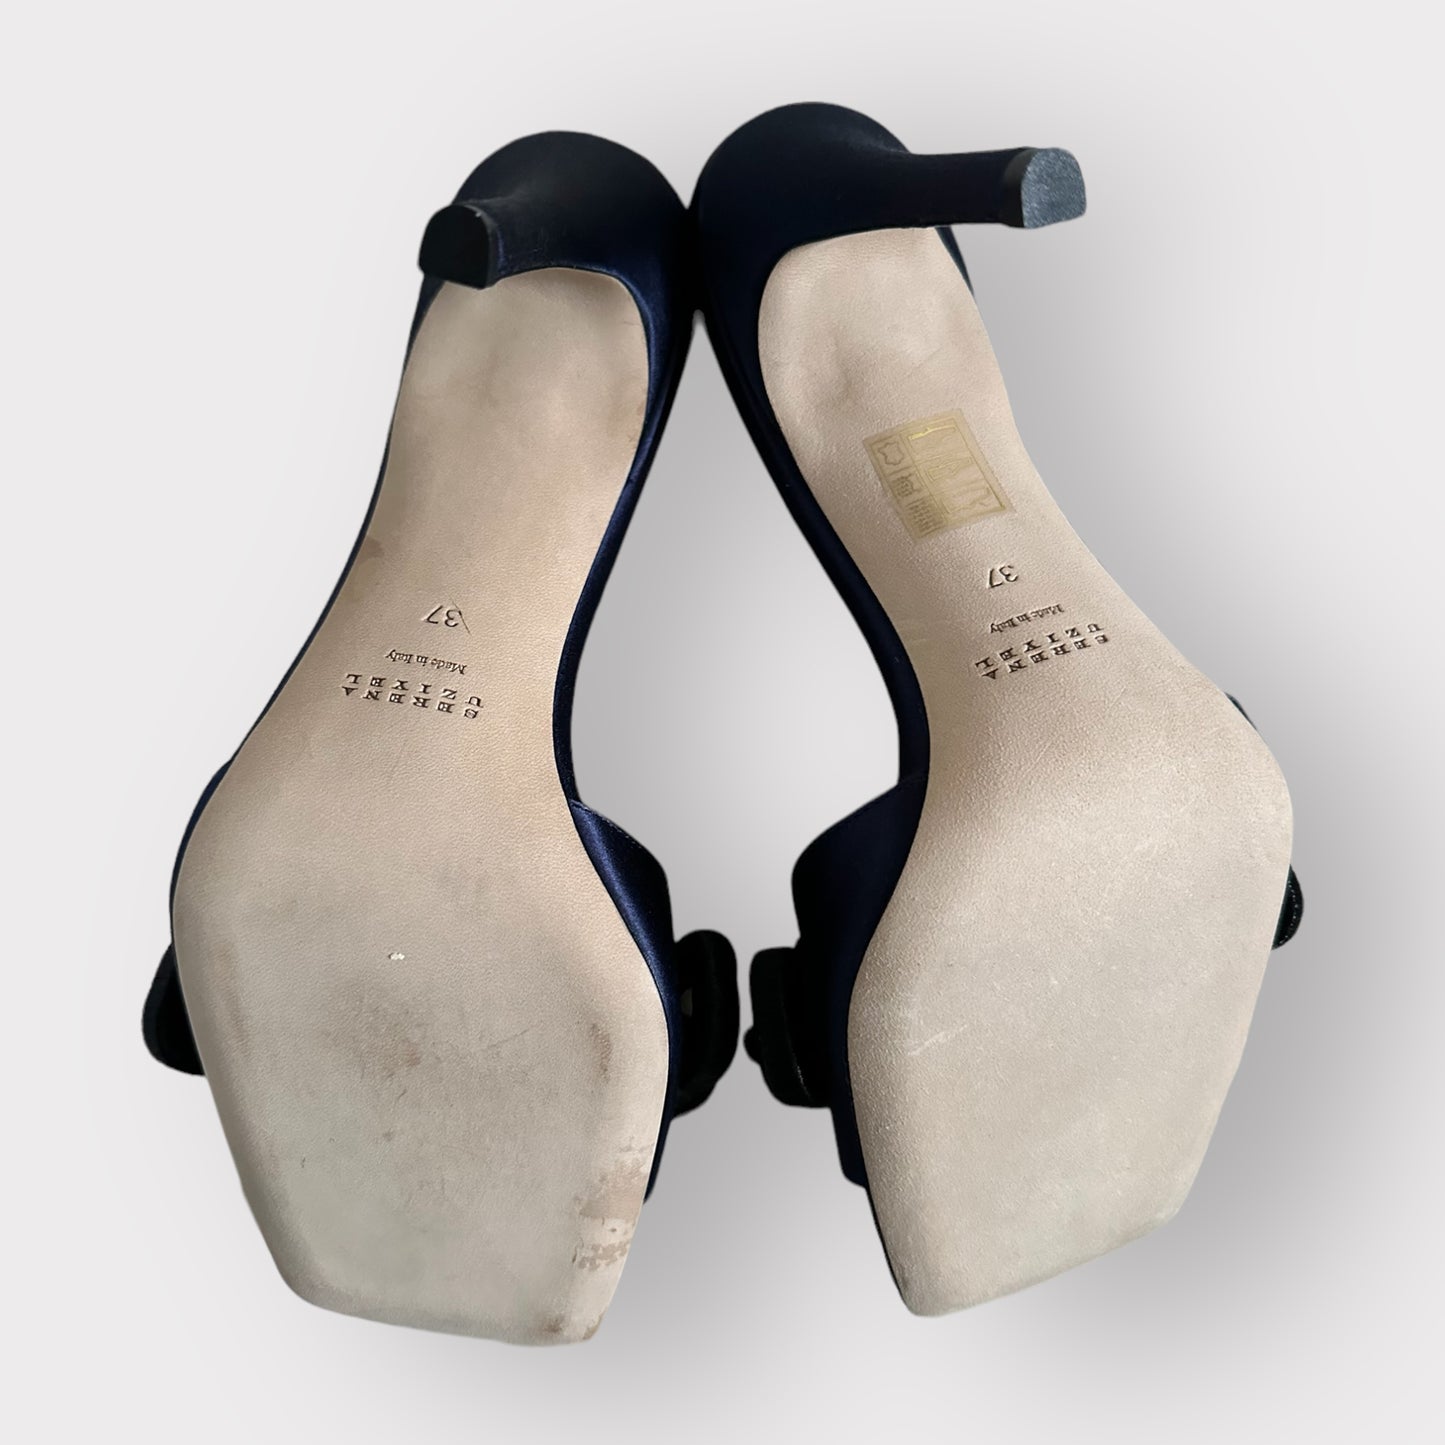 Serena Uziyel @ Net a Porter navy blue black satin mule heels sandals shoes new bnib 37 4